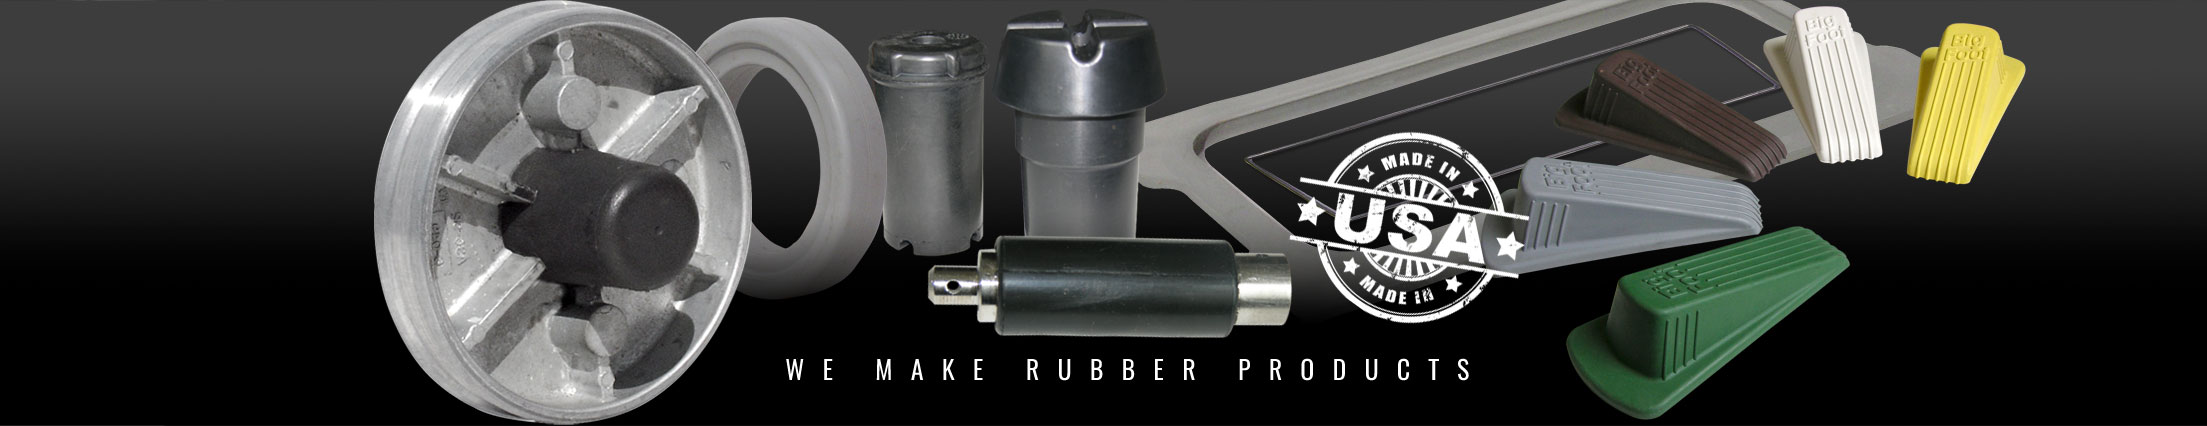 Rubber Manufacturer